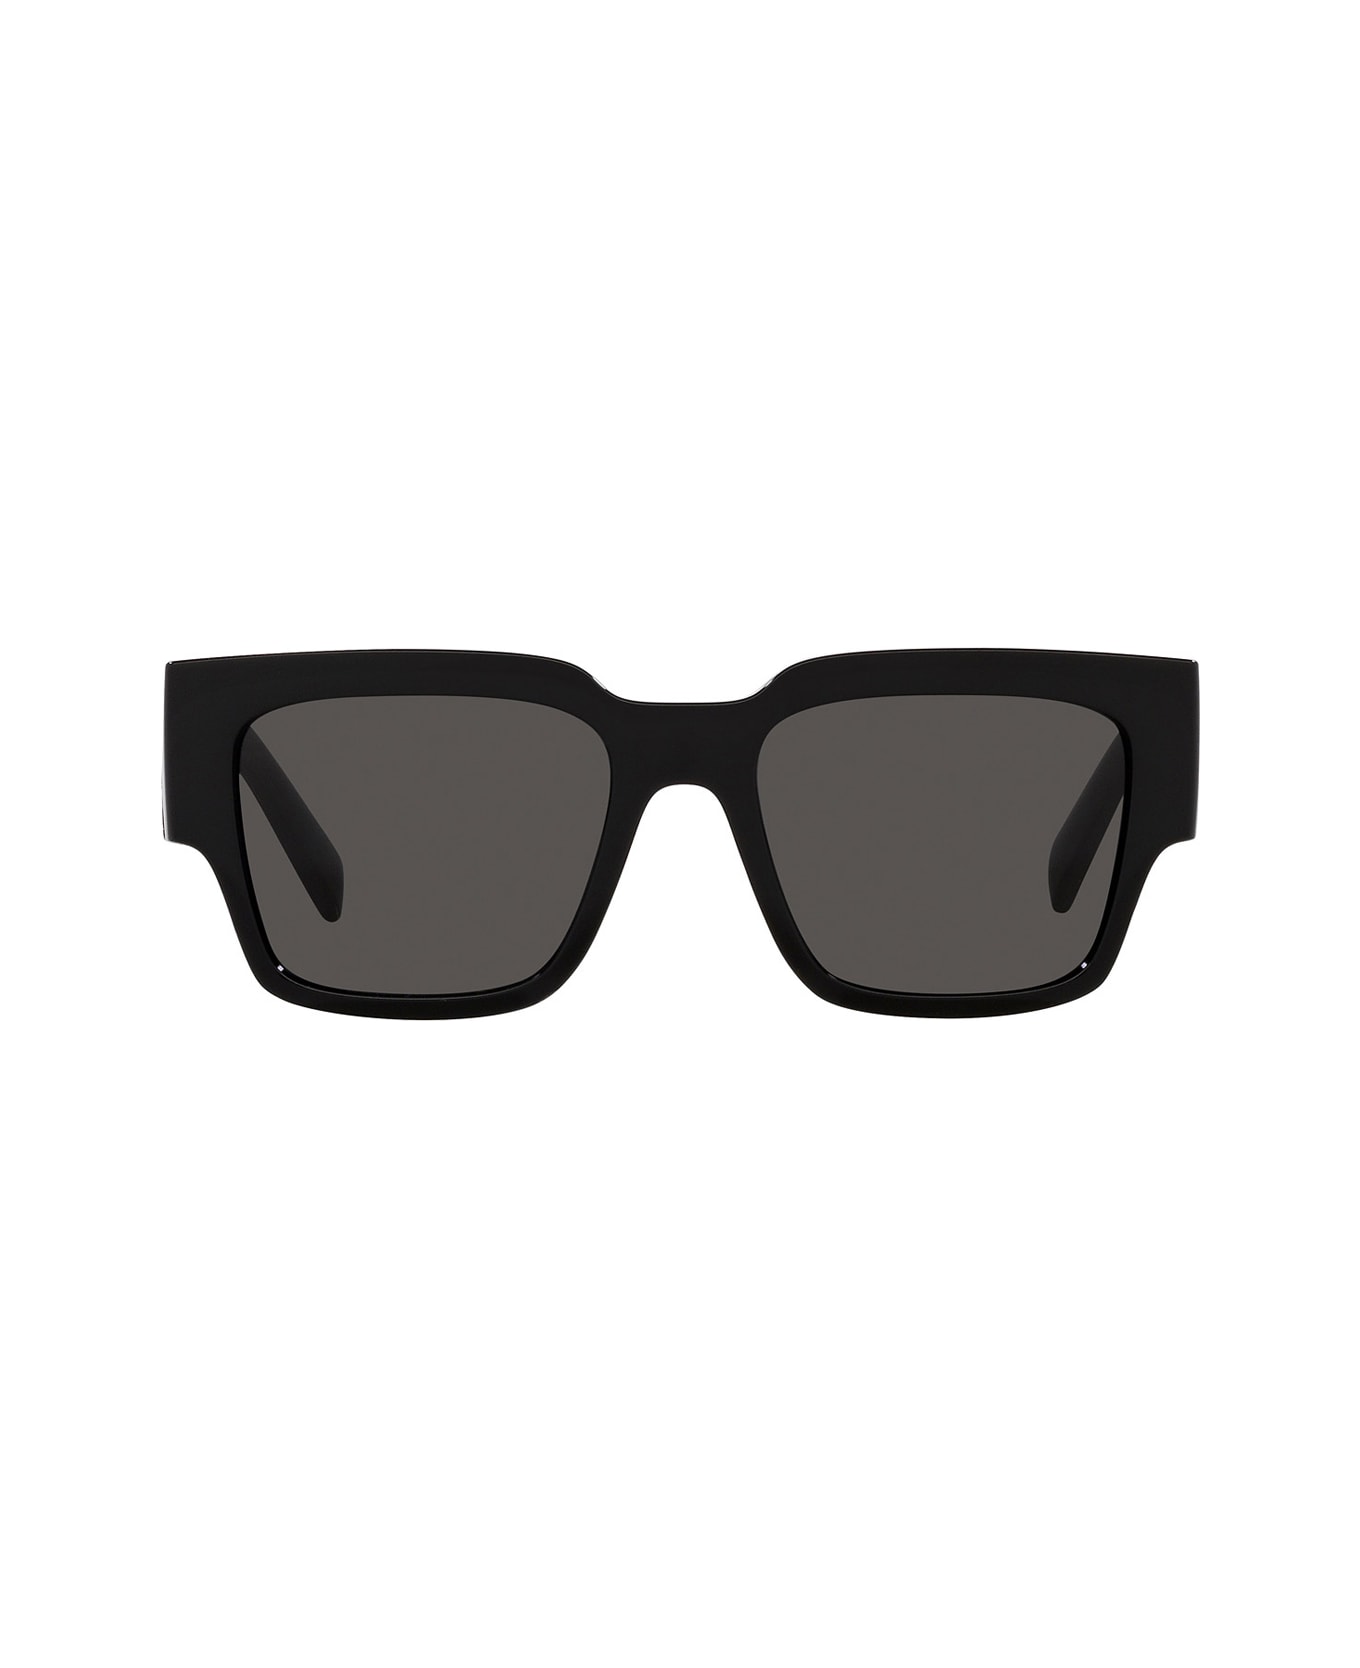 Dolce & Gabbana Eyewear Dg6184 501/87 Sunglasses - Nero